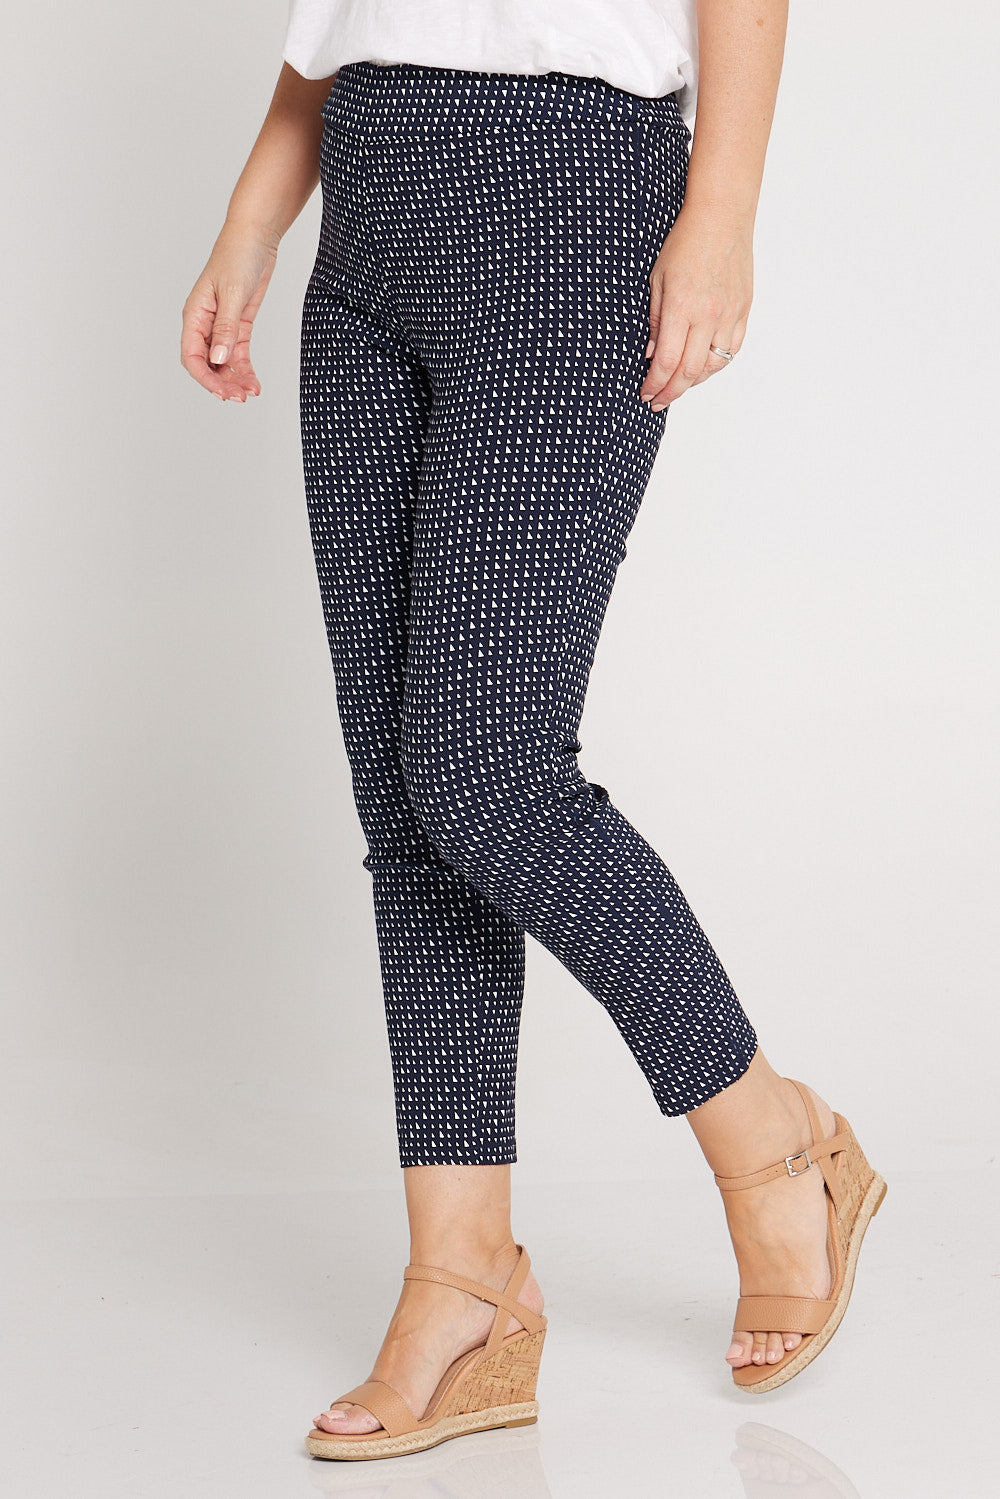 Calloway Pants - Navy Triangle | Australian Made Clothing – TULIO Fashion